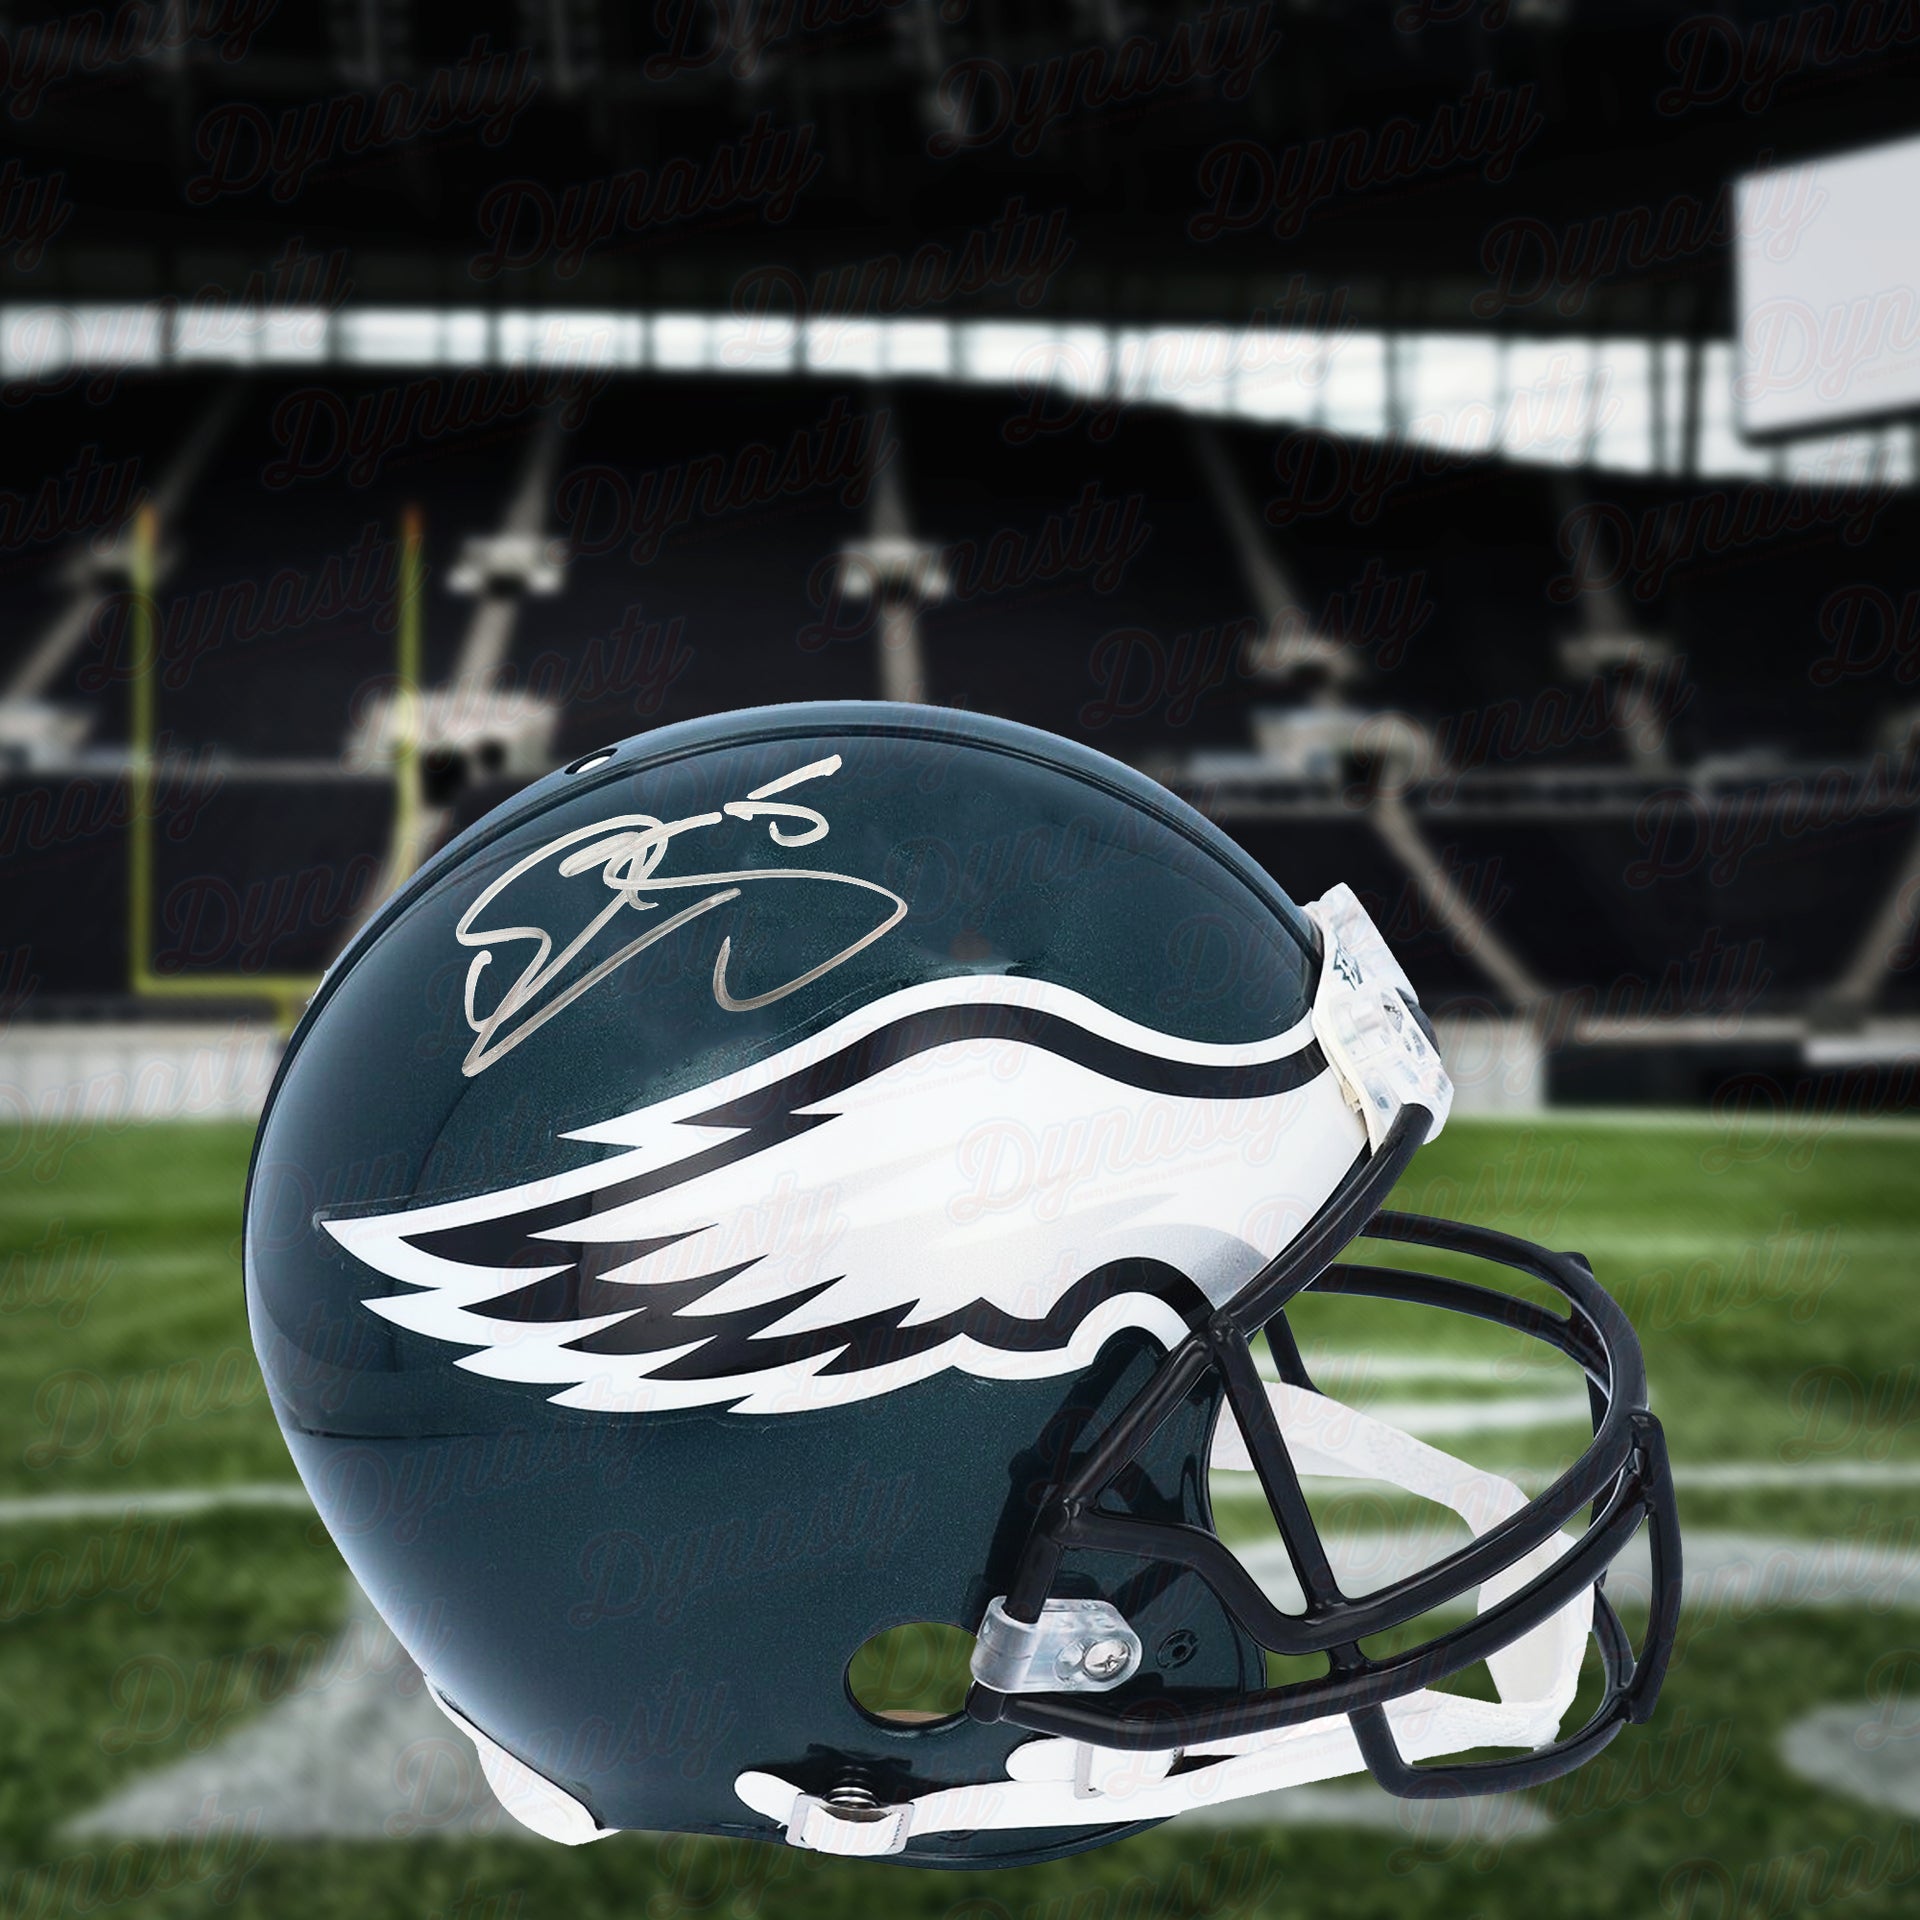 Donovan McNabb Philadelphia Eagles Autographed Full-Size Helmet - Dynasty Sports & Framing 